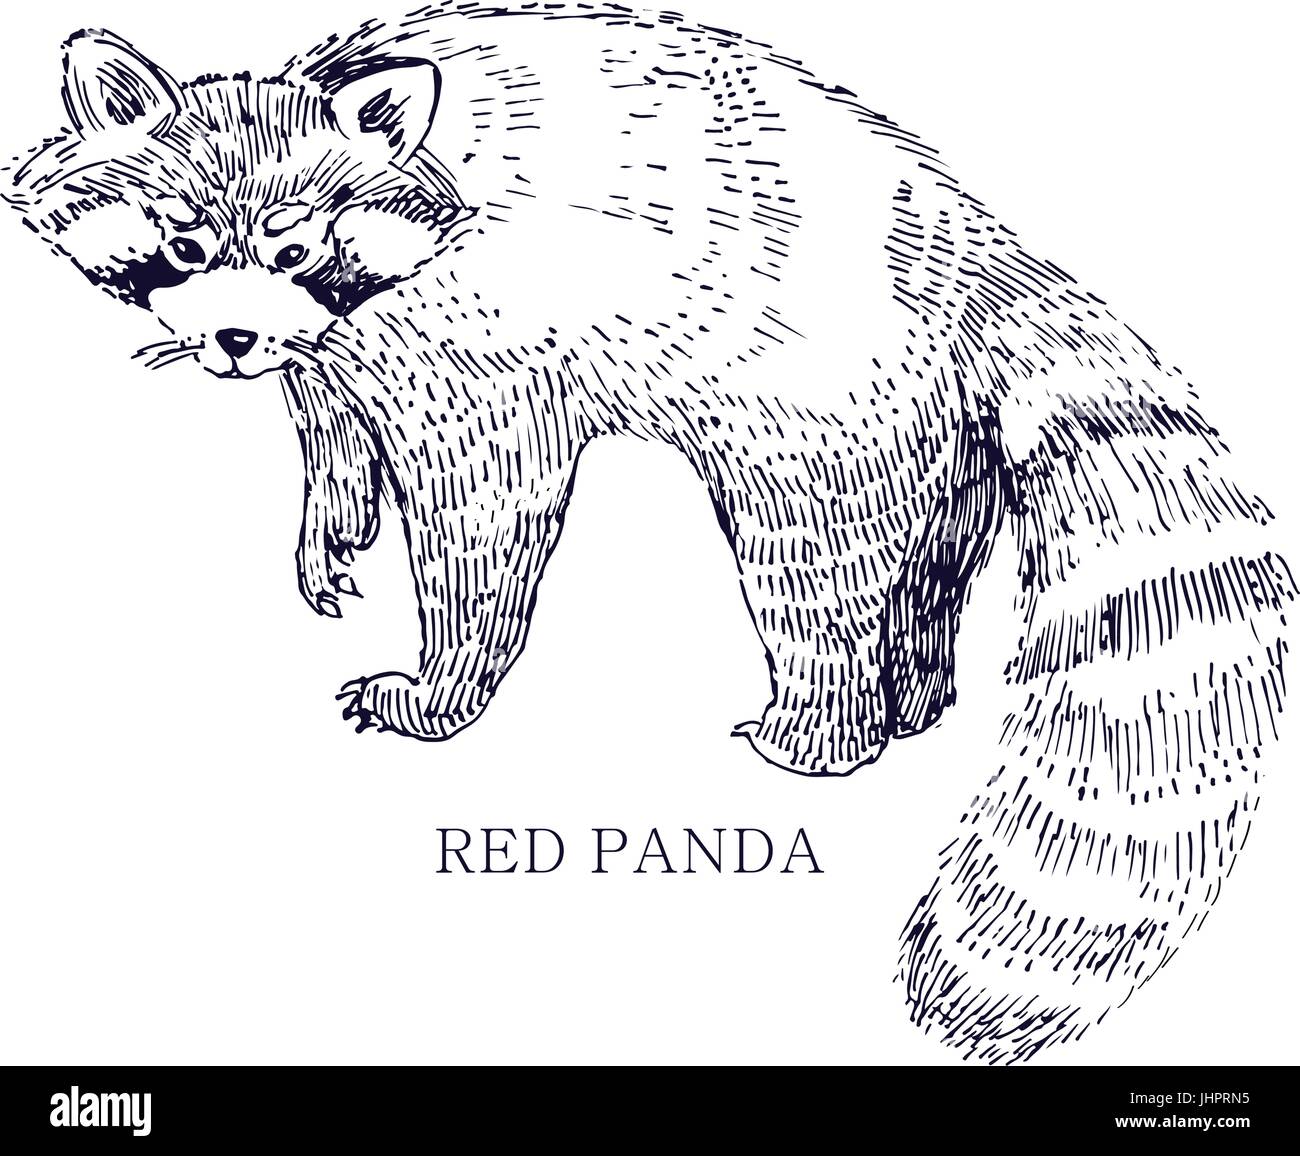 Roter Panda, seltene Tier, Erhaltungszustand Stock Vektor